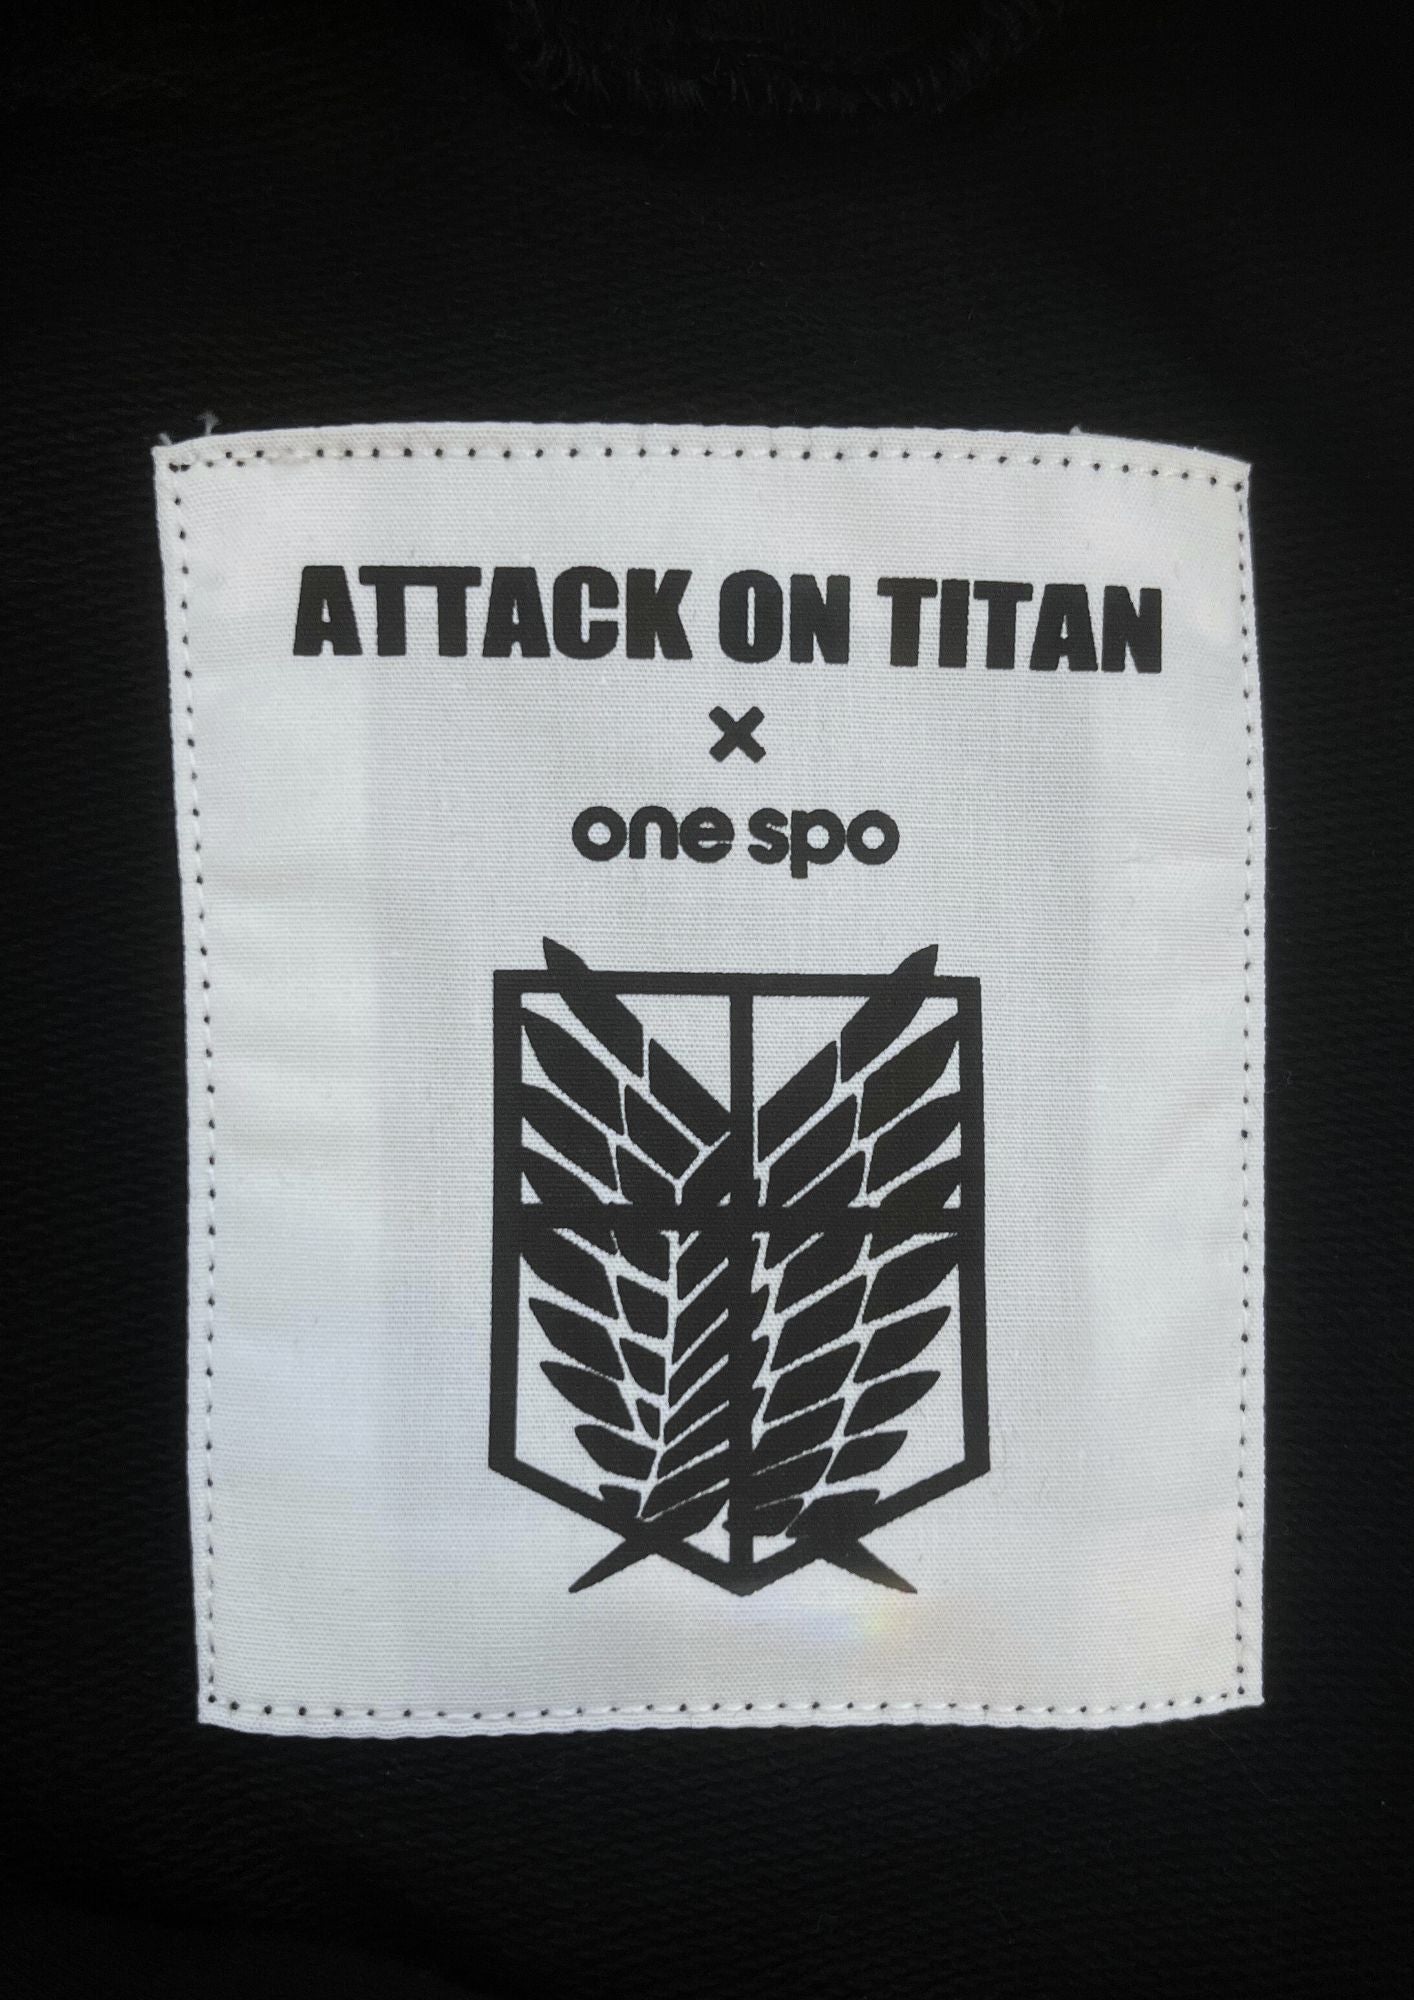 2019 Attack on Titan x One Spo Eren Yeager Parachute Hoodie